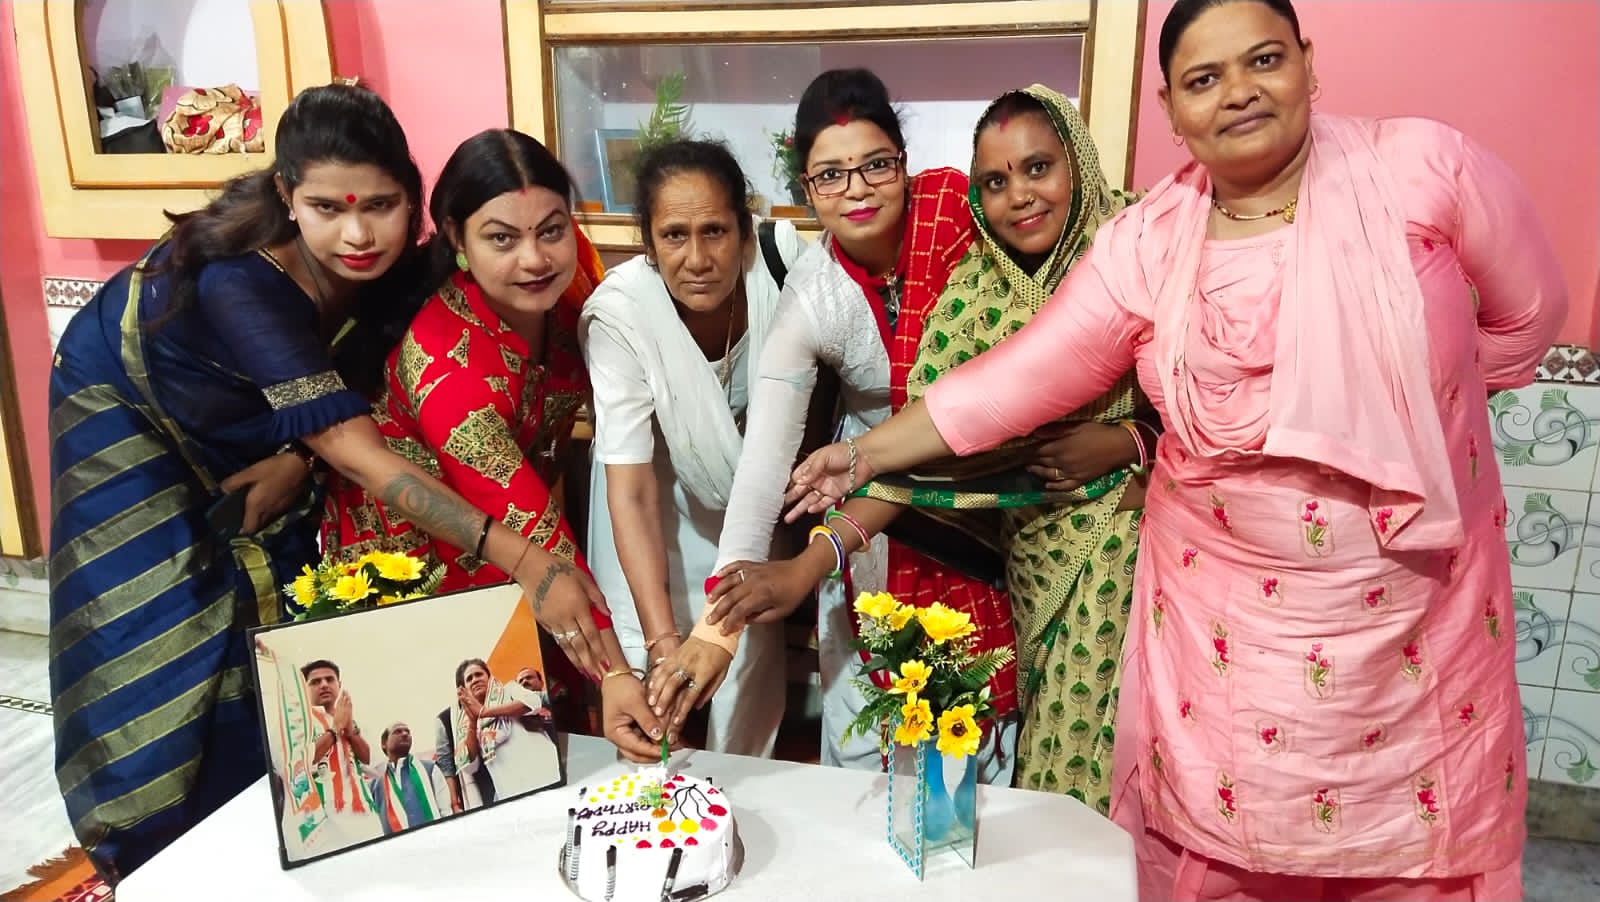 पूर्व पार्षद शोभा बाई ने केक काटकर मनाया सचिन पायलट जी का जन्मदिन | New India Times